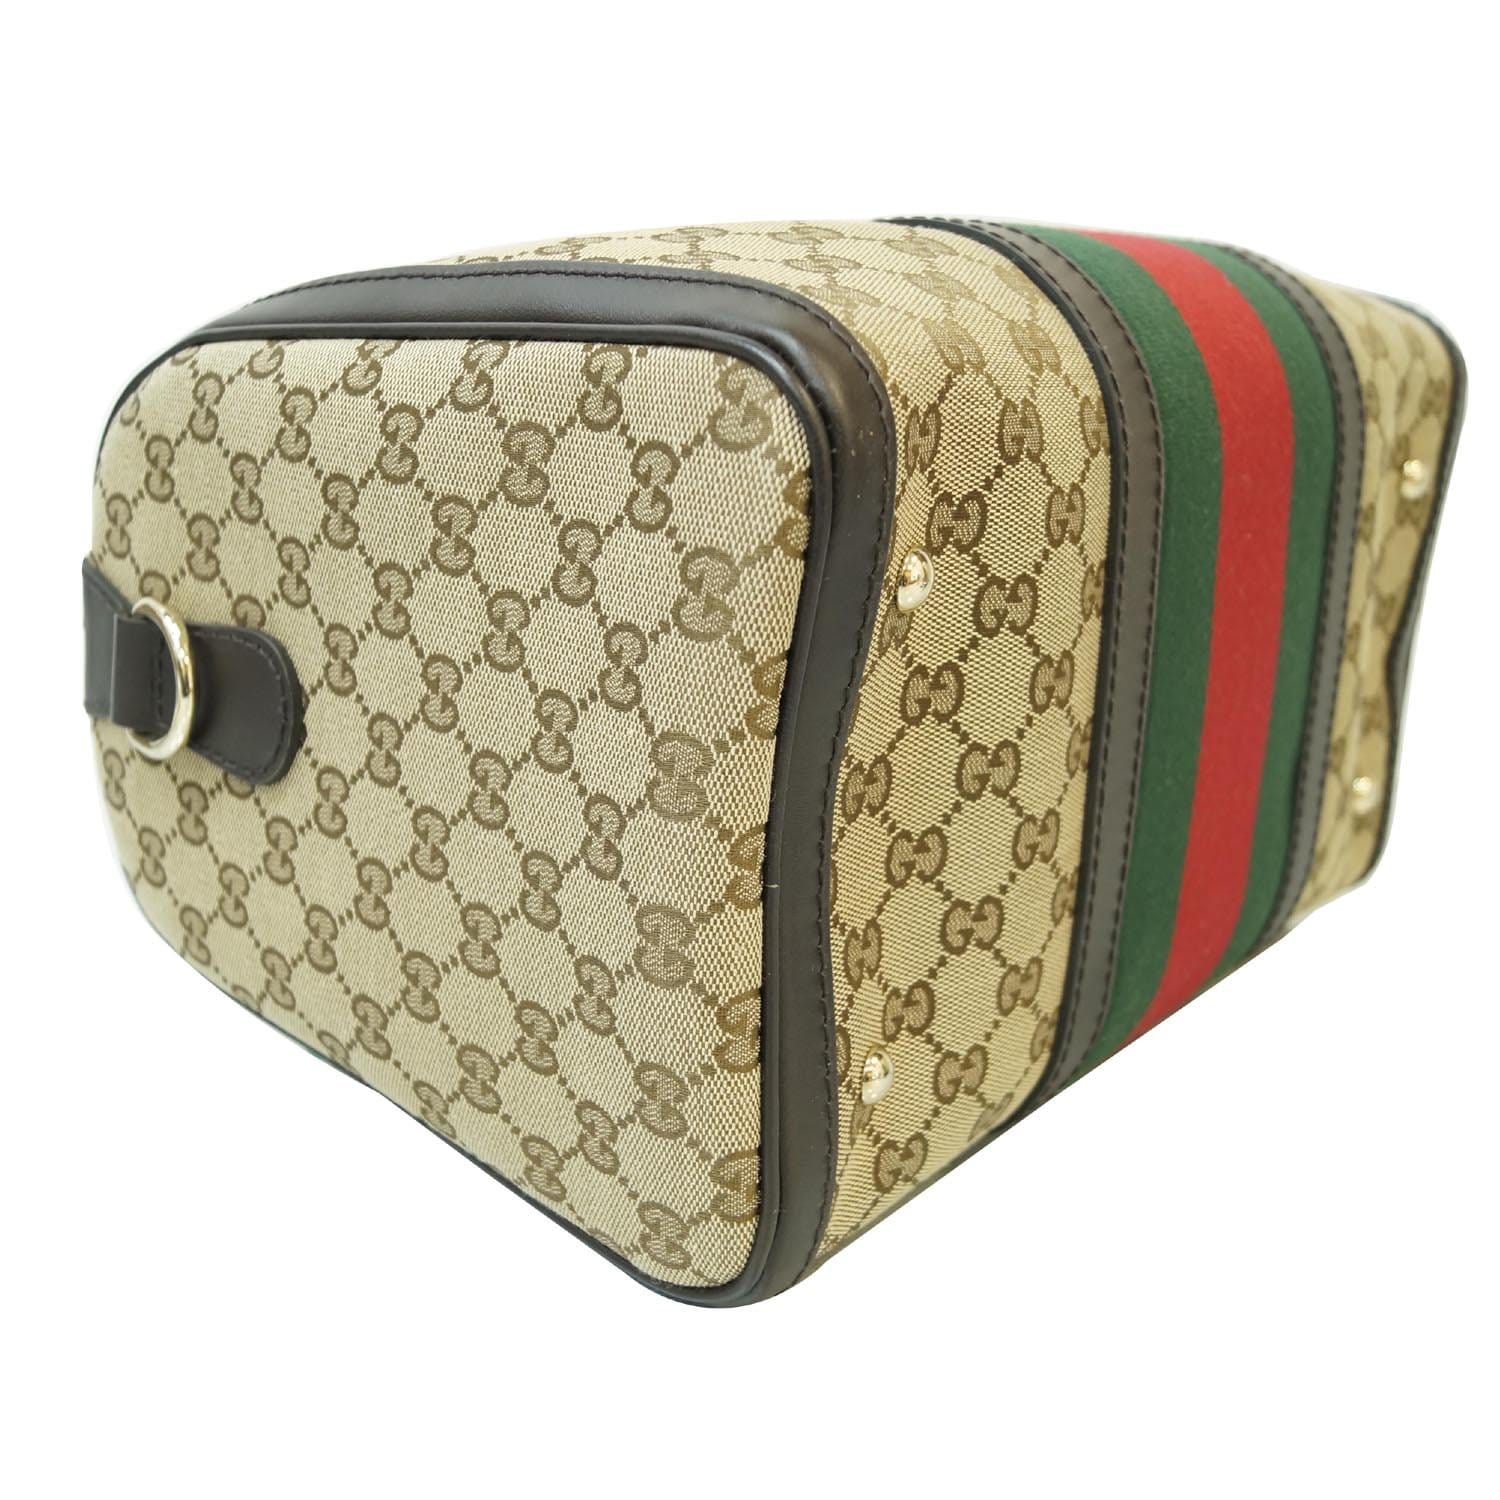 The Gucci Bag: My Favorite Vintage Find